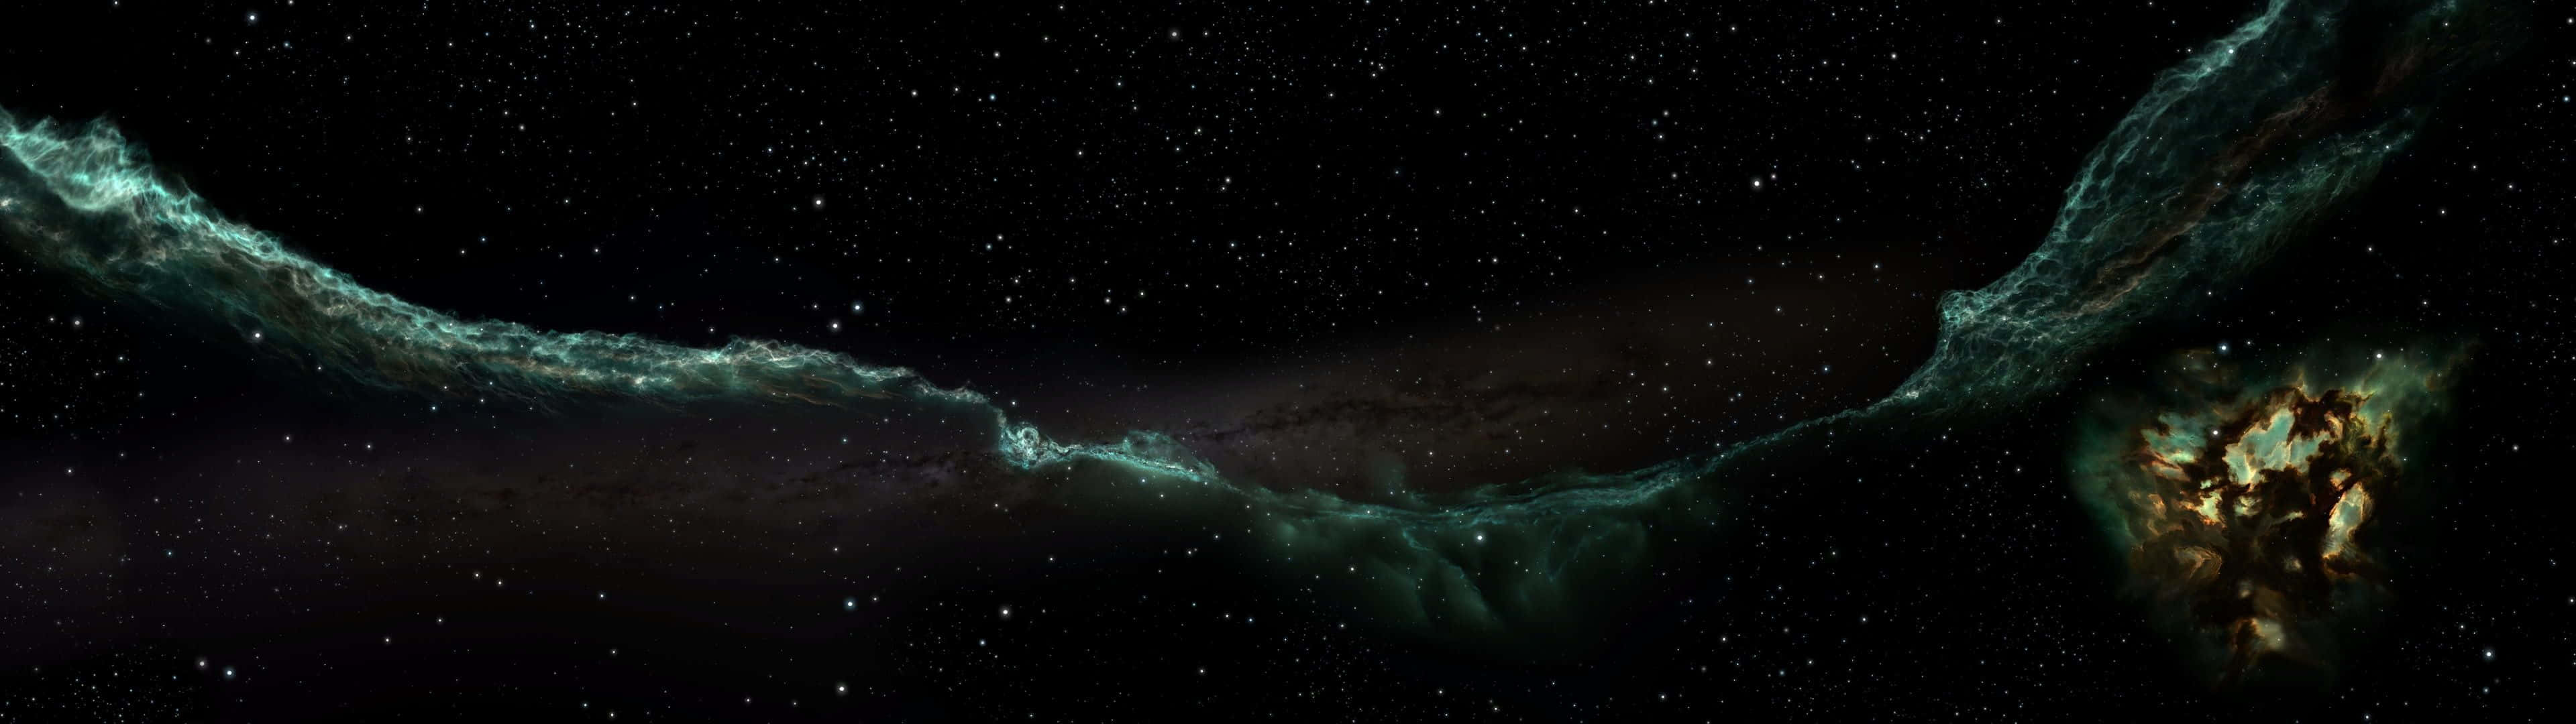 An Incredible View of a Galactic Nebula Wallpaper